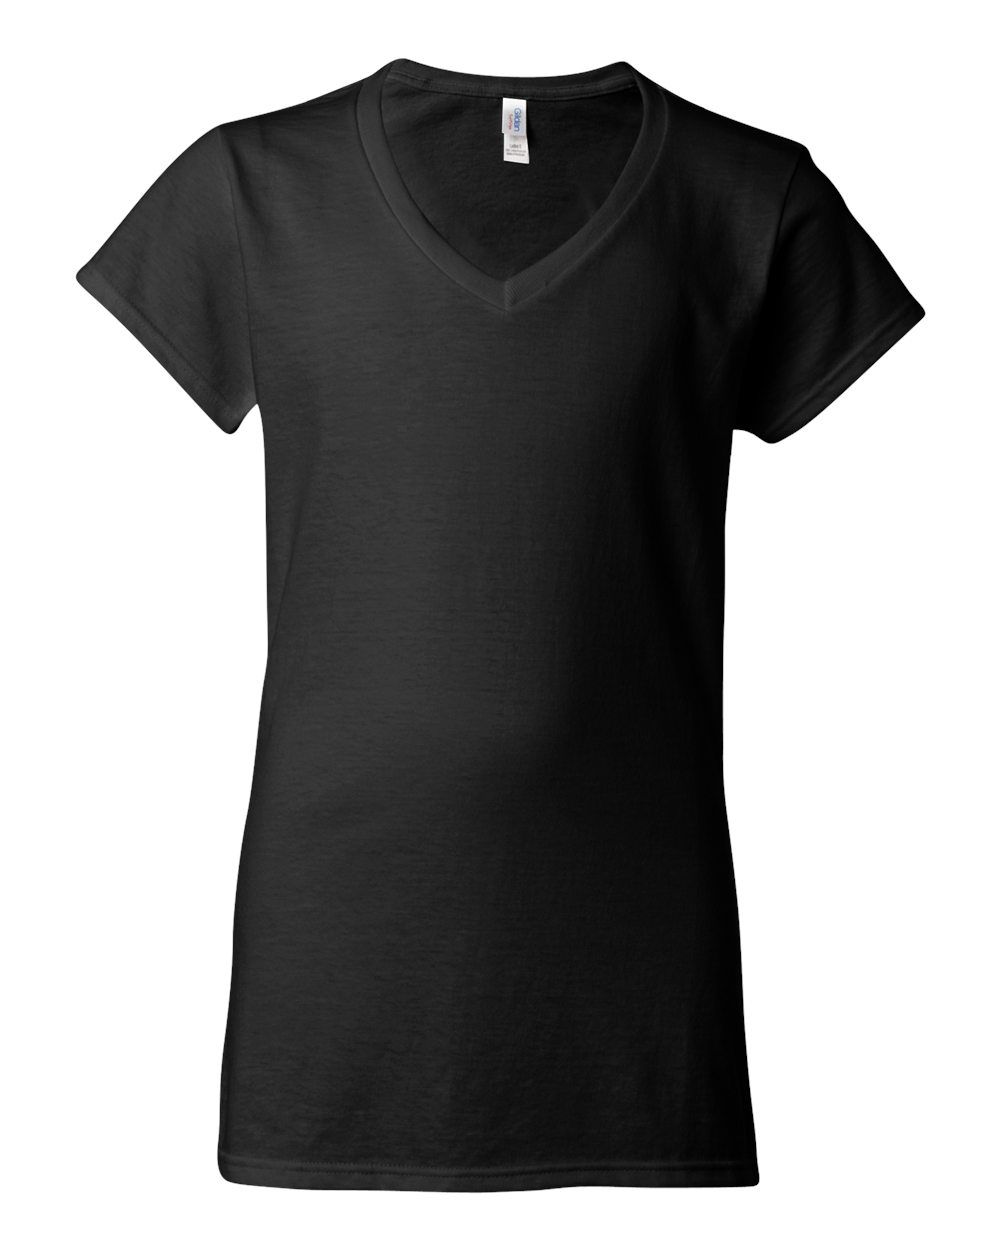 Women's Tall V-Neck Tee Shirts: Black Scoop Neck Tee